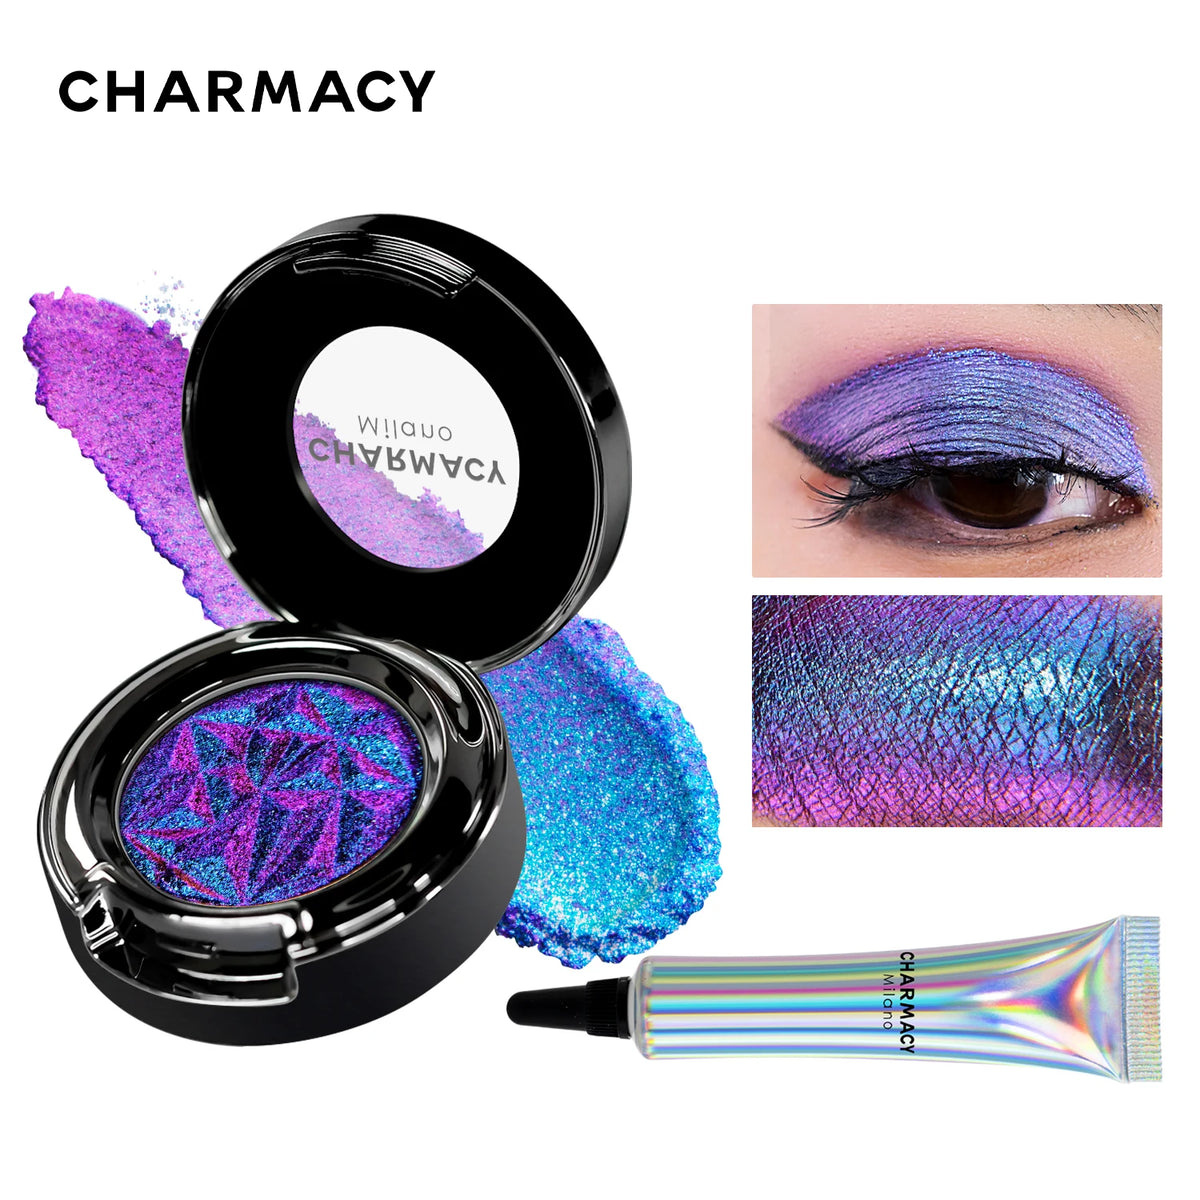 SEO Title: CHARMACY Shiny Duochrome Eyeshadow Set | Long-lasting Glitter Eye Shadows with Primer